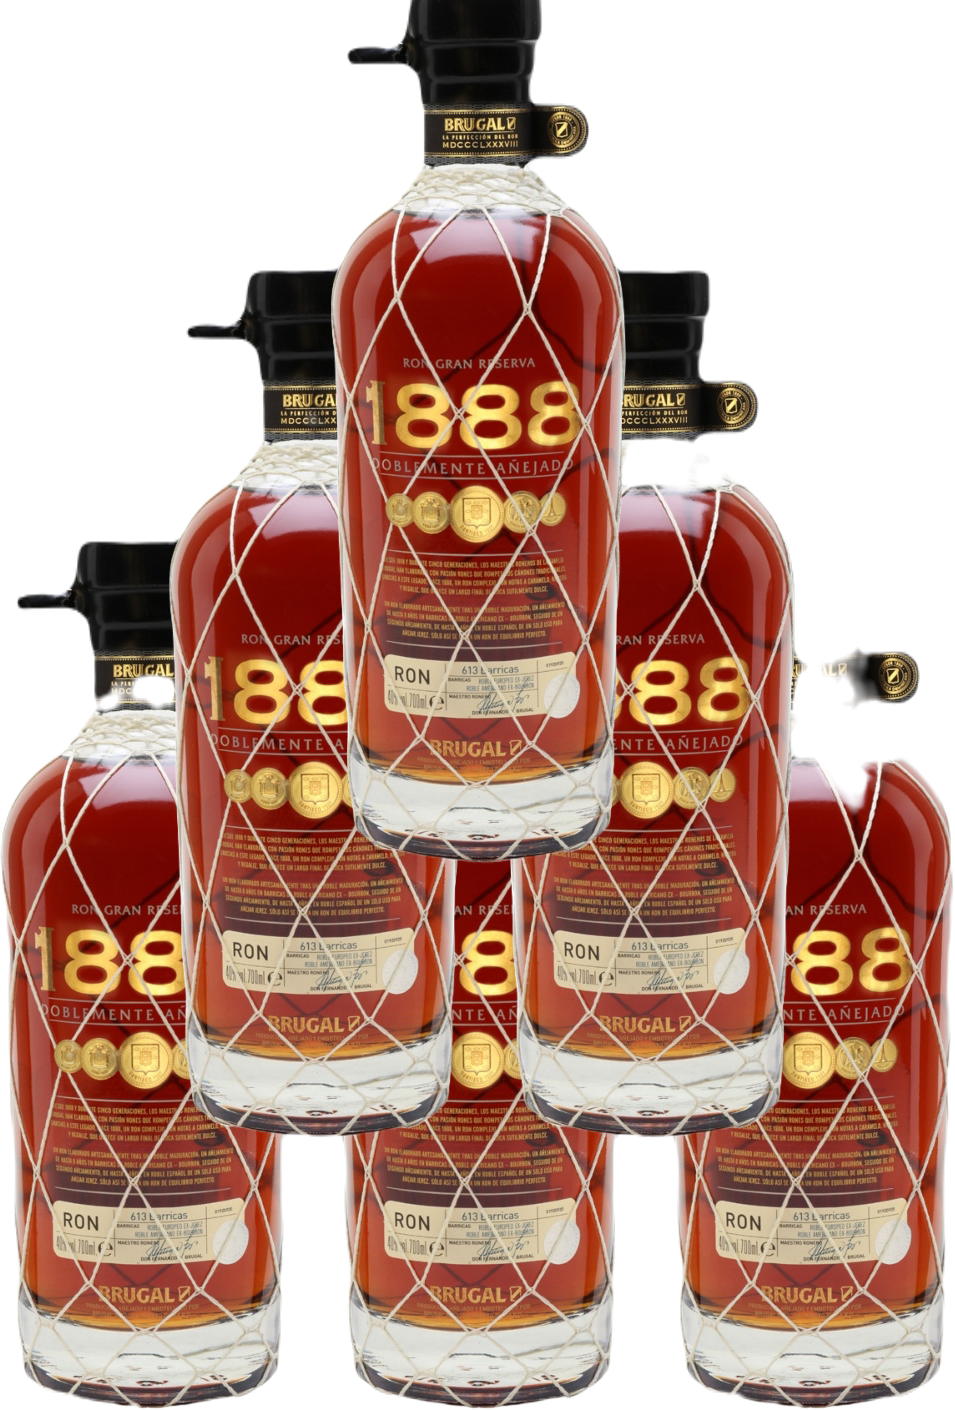 Brugal 1888 Doblemente Añejado Gran Reserva Rum 750 ML